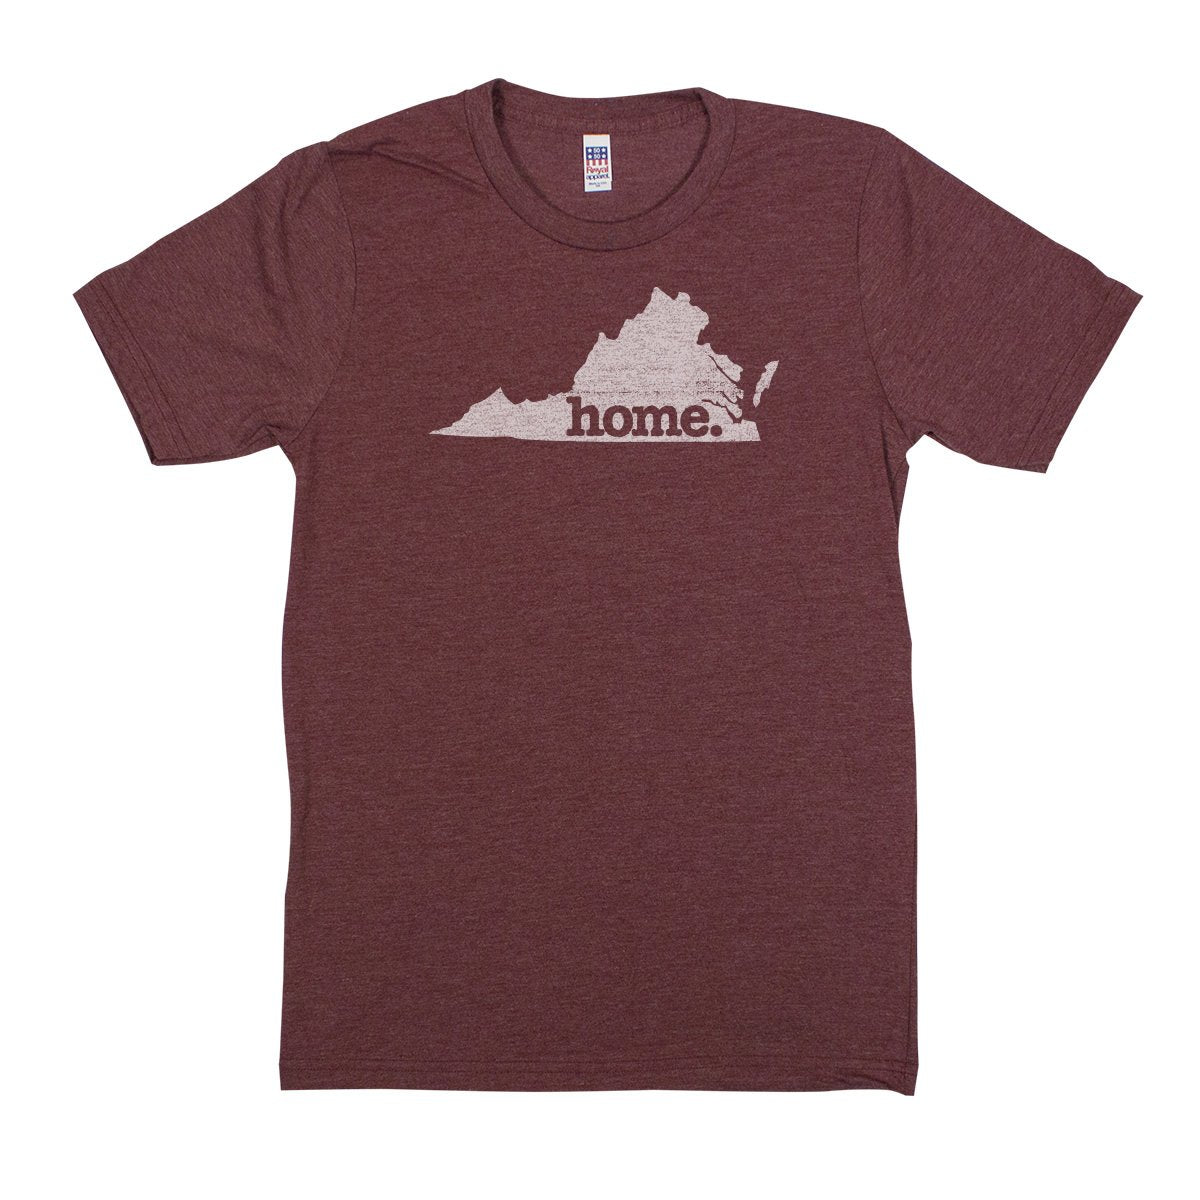 home. Men’s Unisex T-Shirt - California